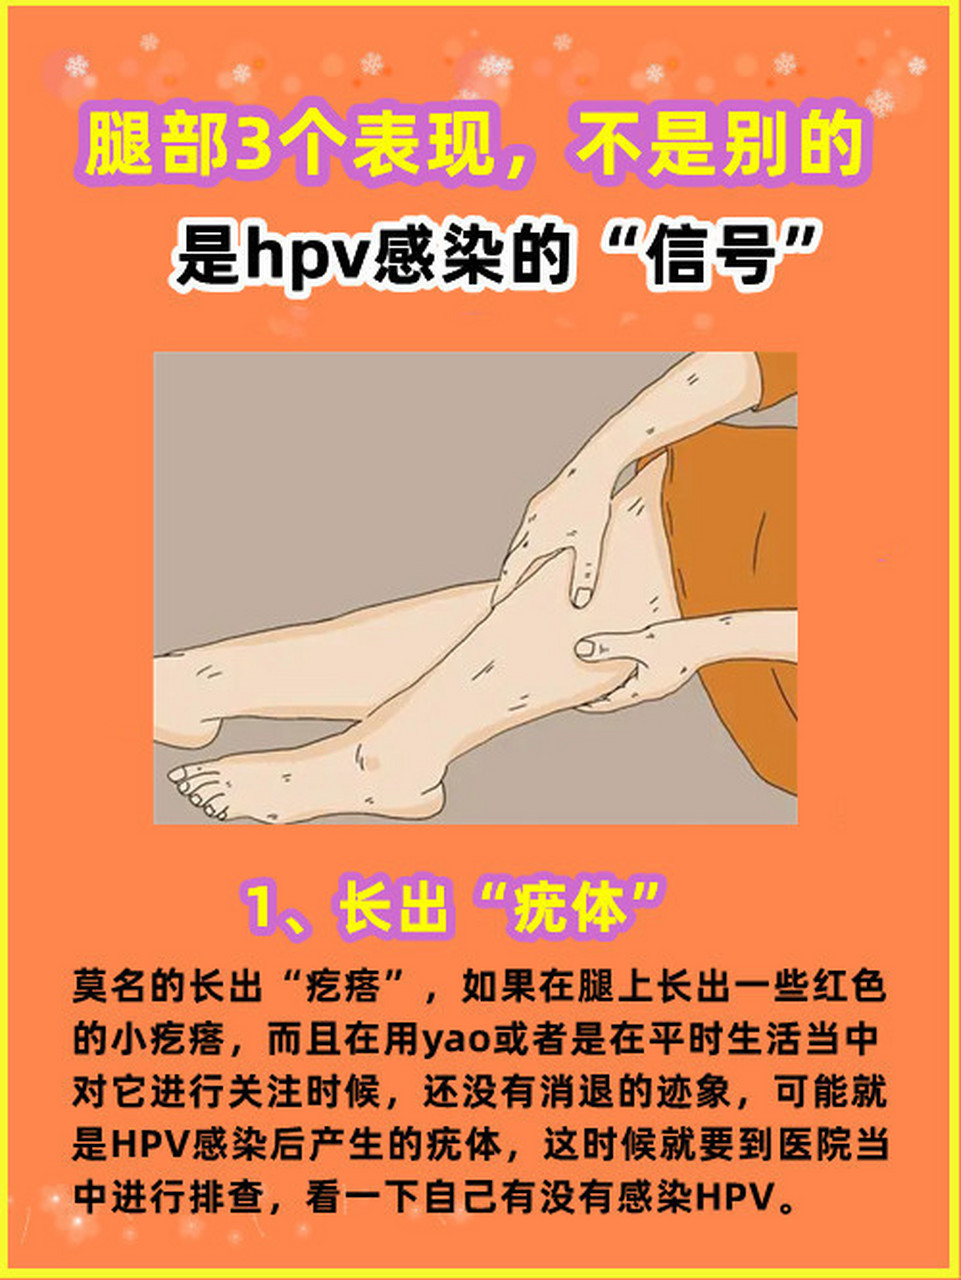 hpv有什么表现症状hvp图片